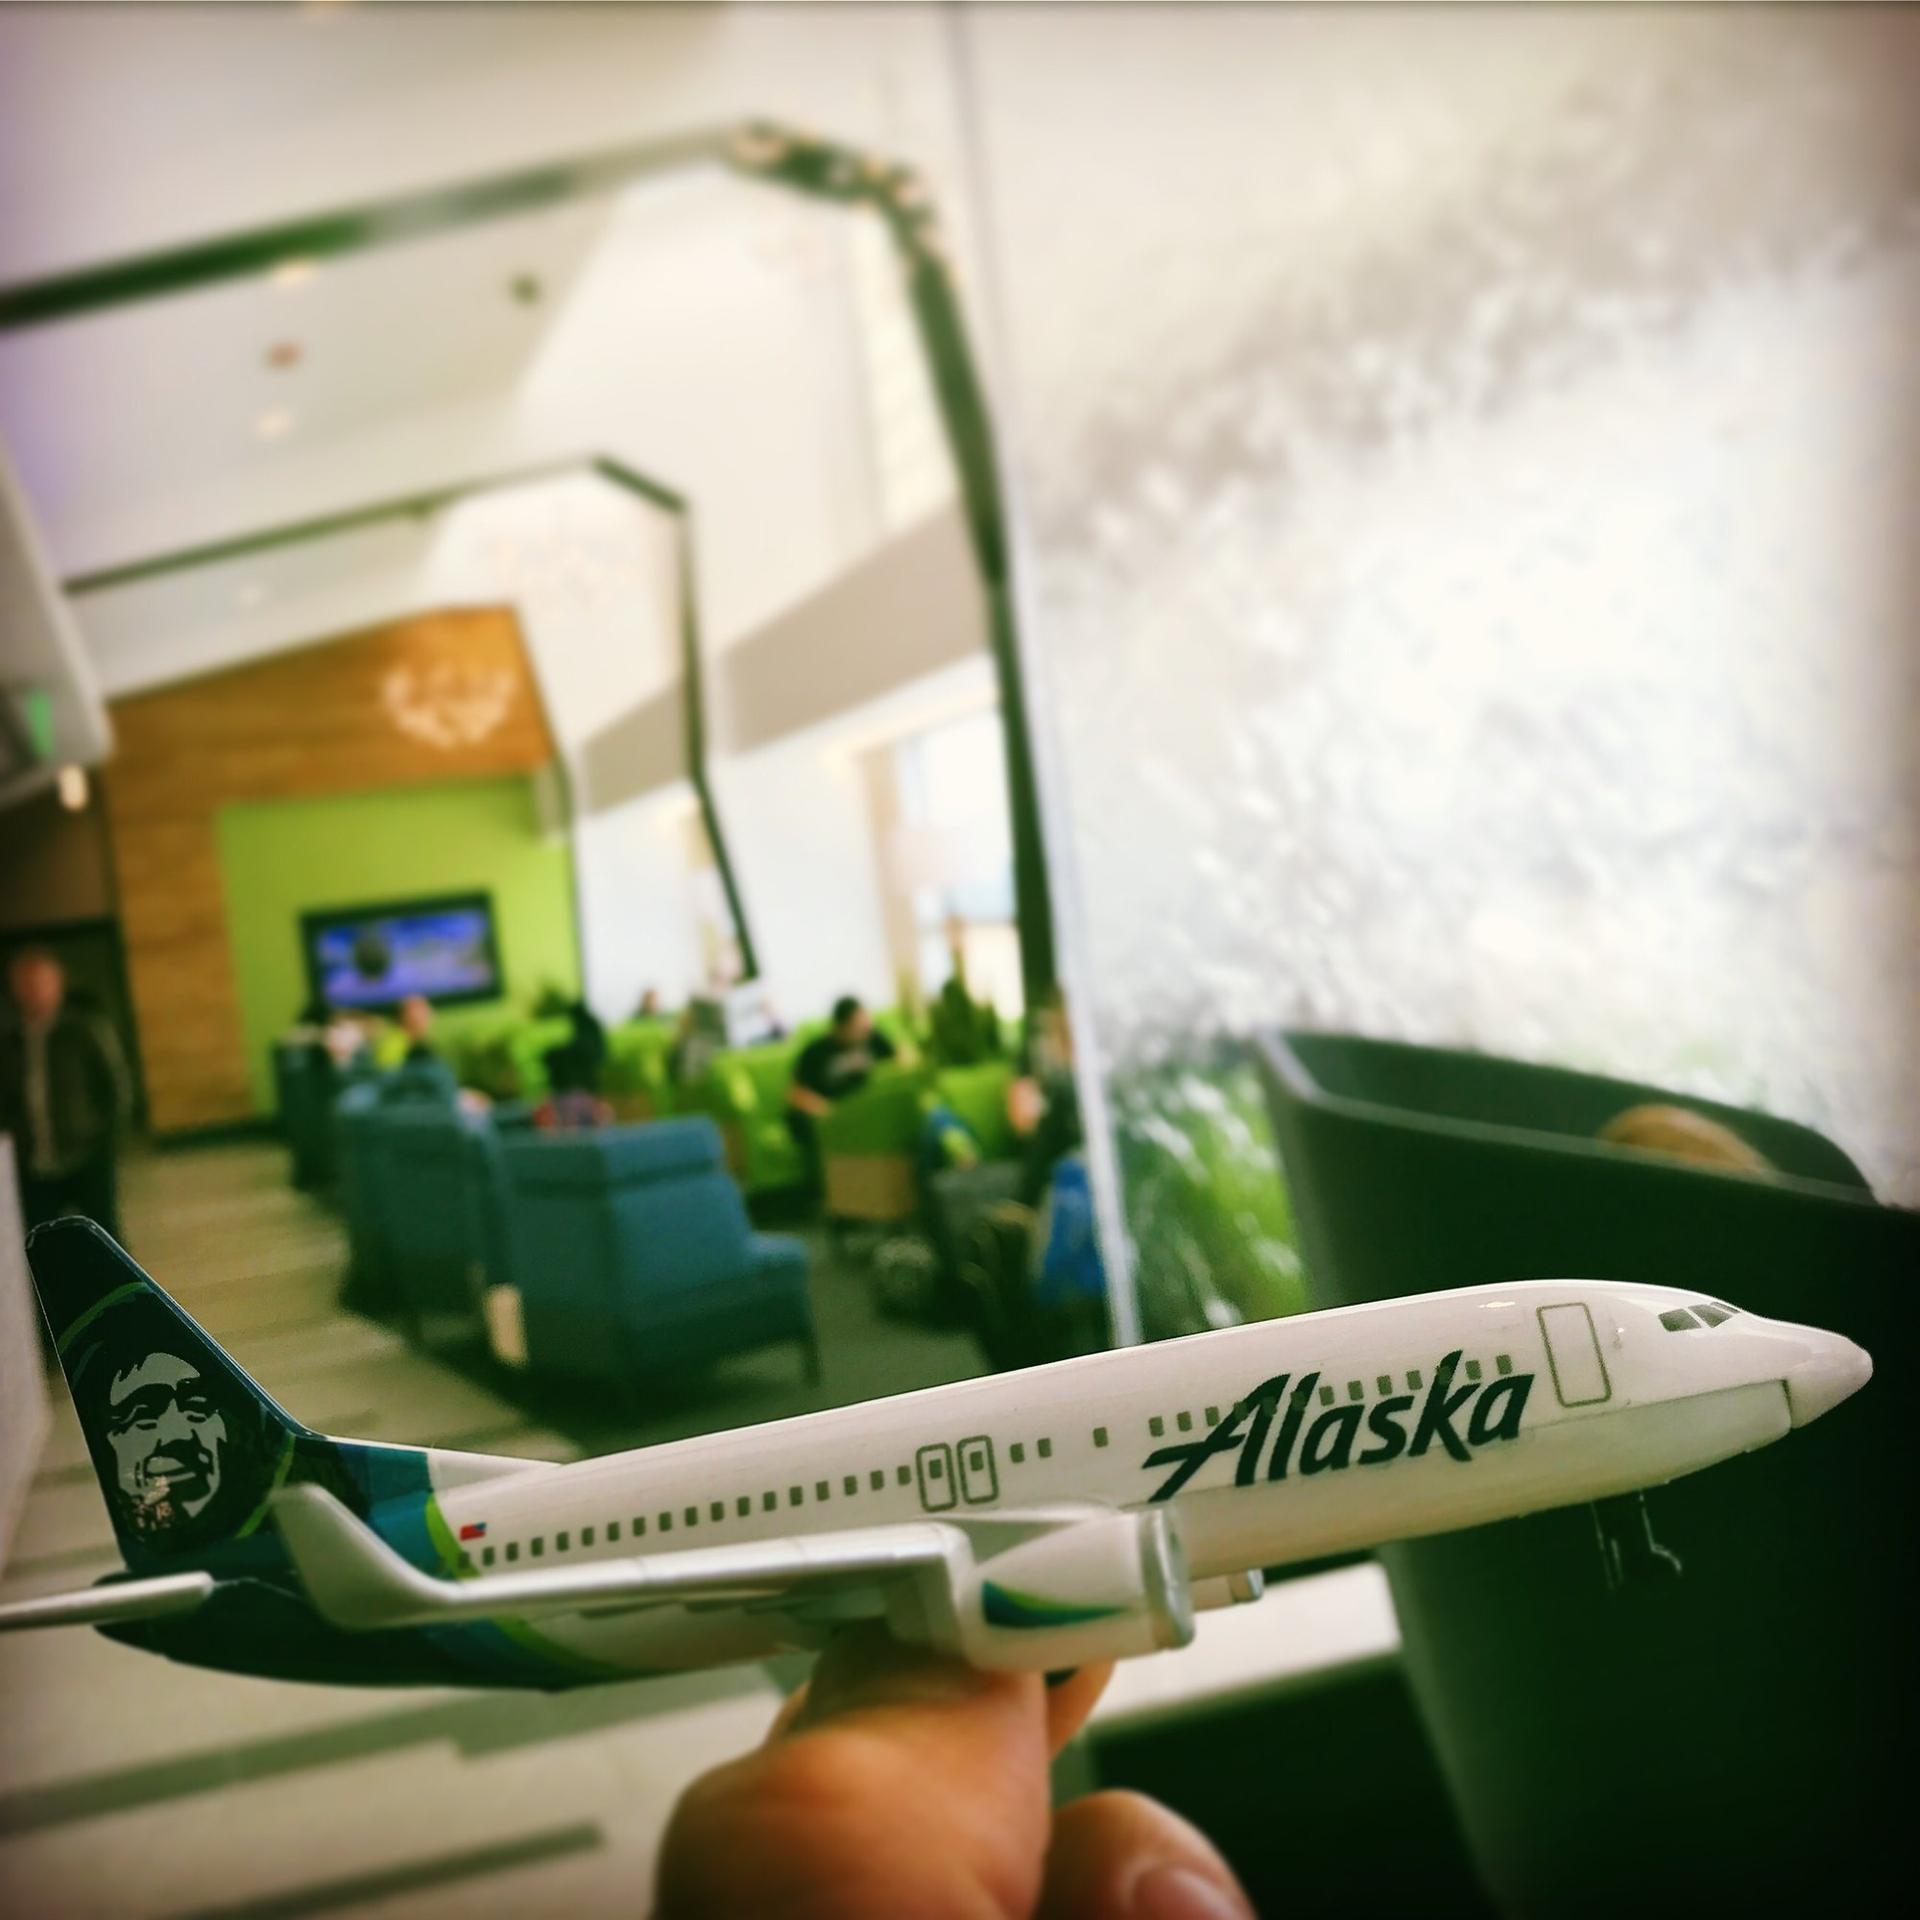 Alaska Airlines Alaska Lounge image 36 of 36